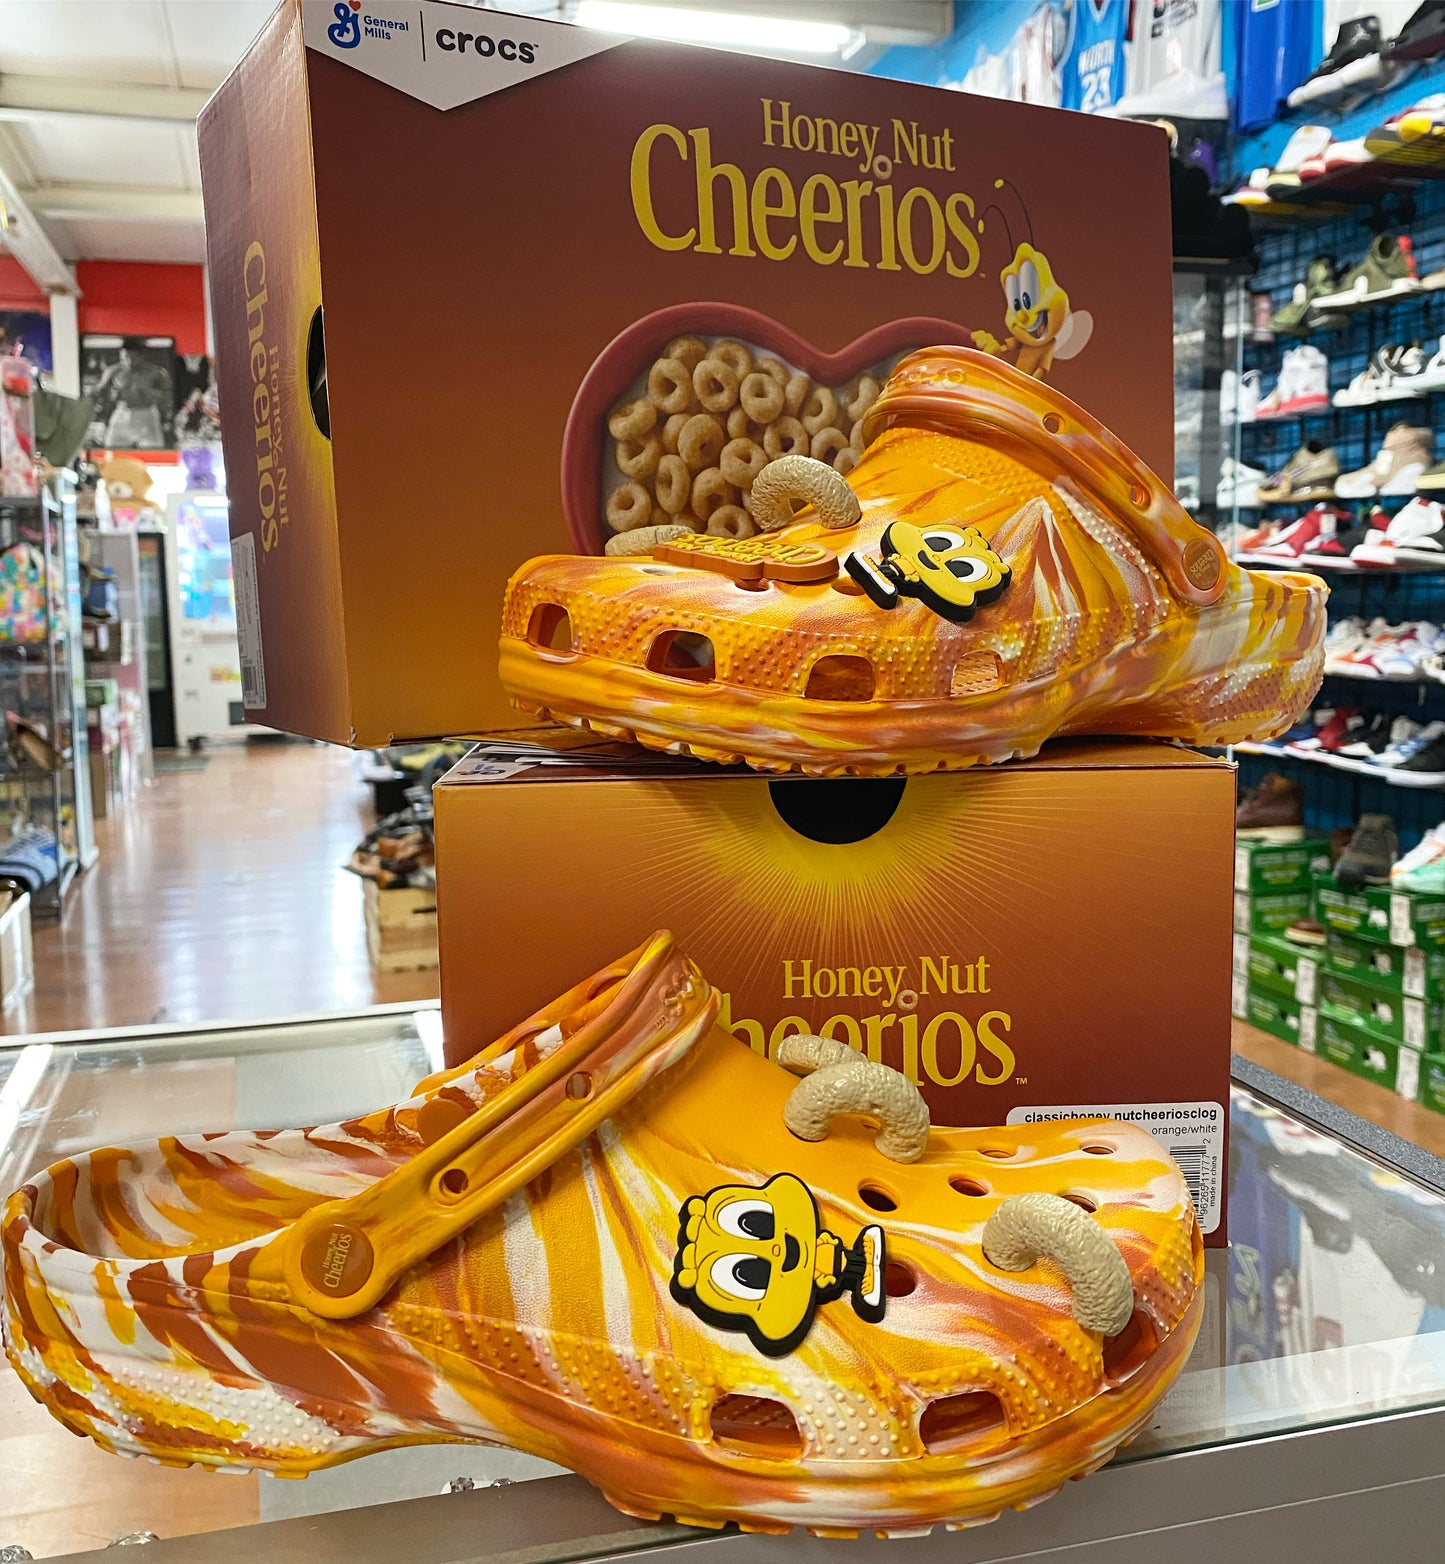 Crocs Classic Nut Cheerios